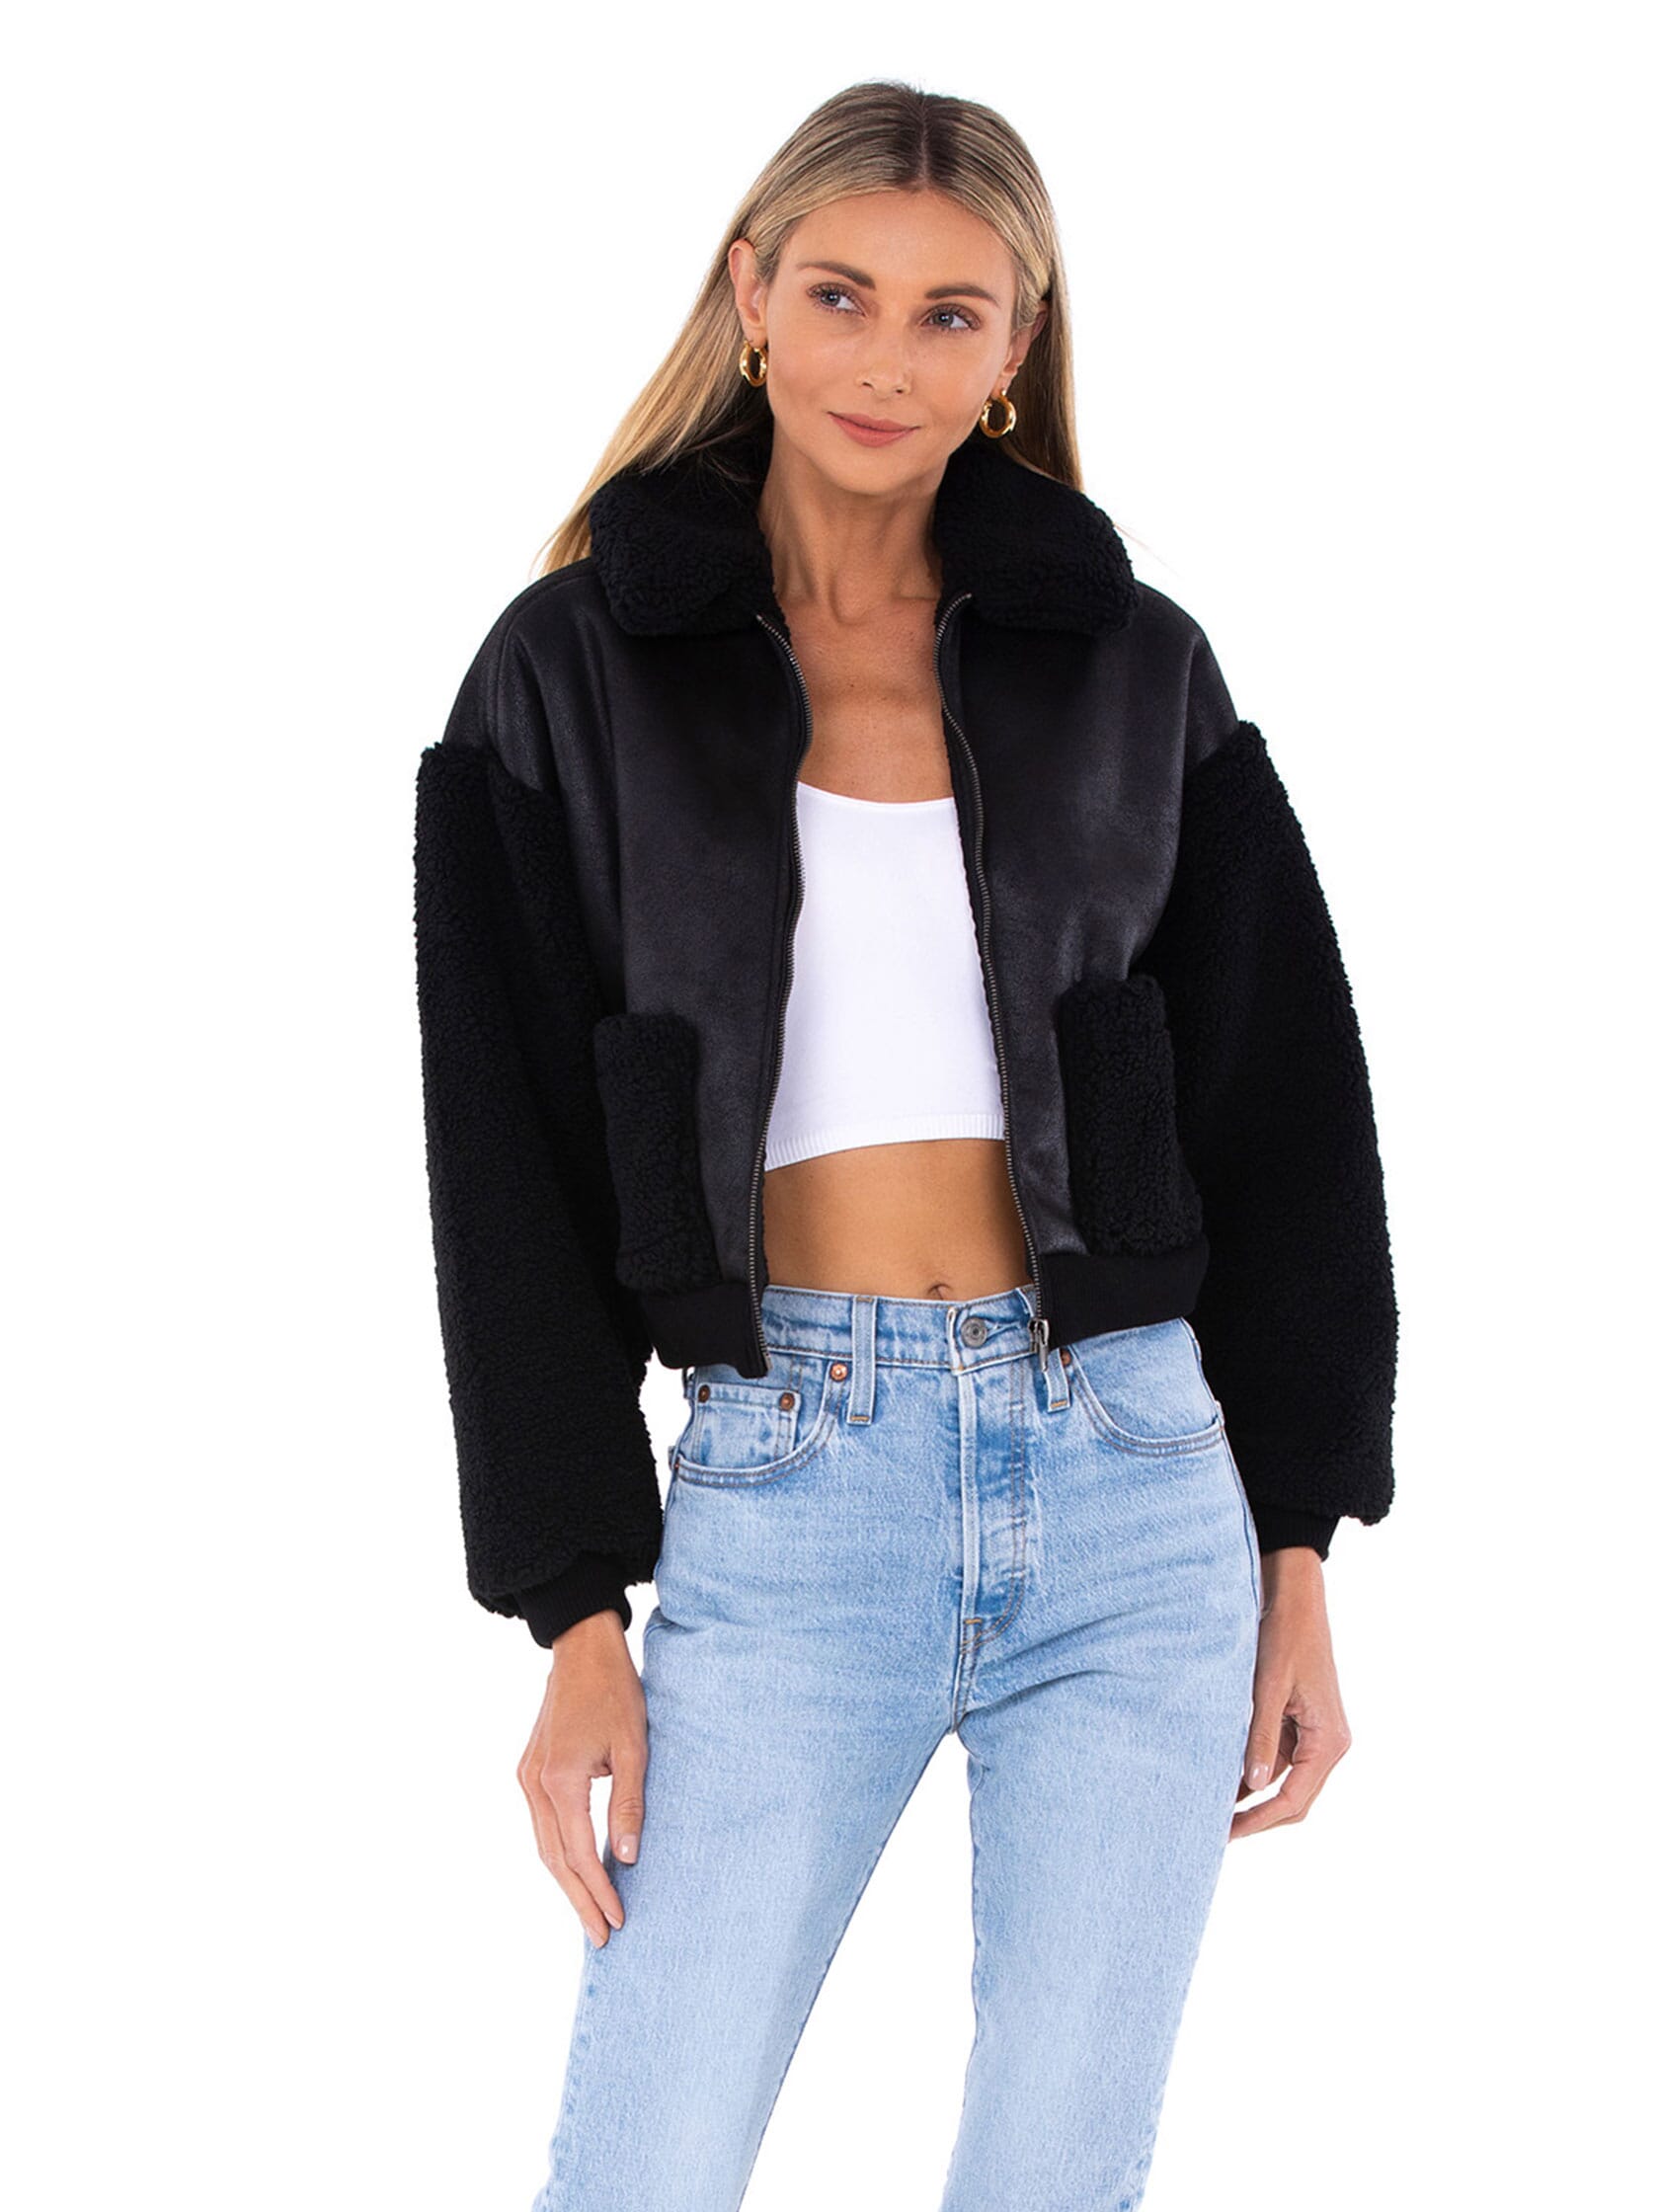 BB Dakota | Mixed Feelings Jacket in Black | FashionPass